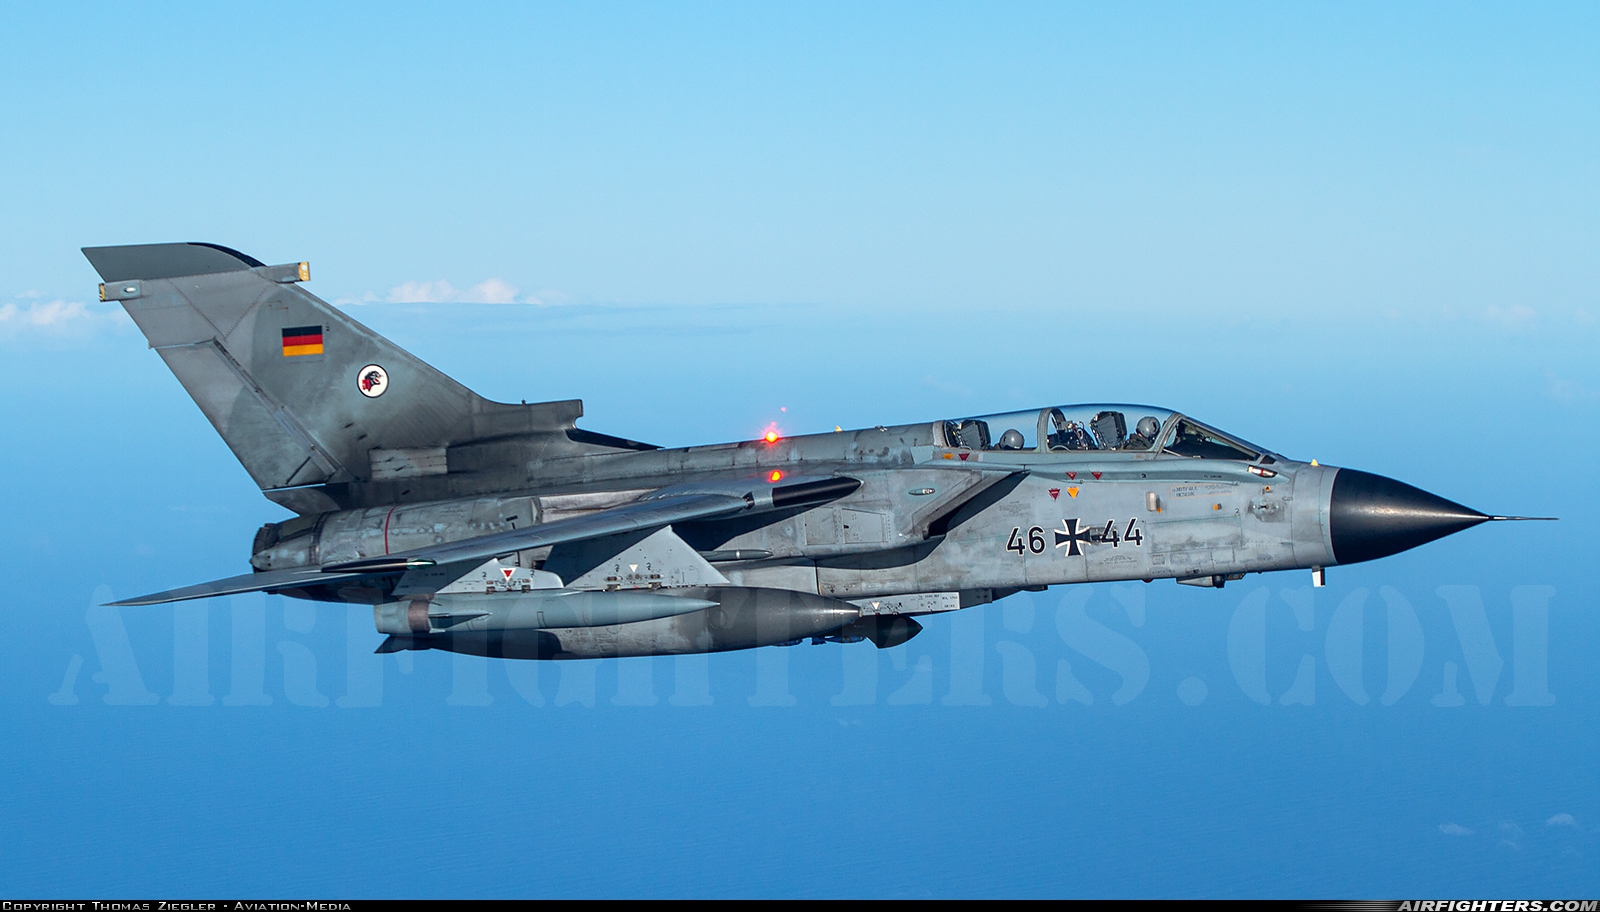 Germany - Air Force Panavia Tornado ECR 46+44 at North Sea, International Airspace